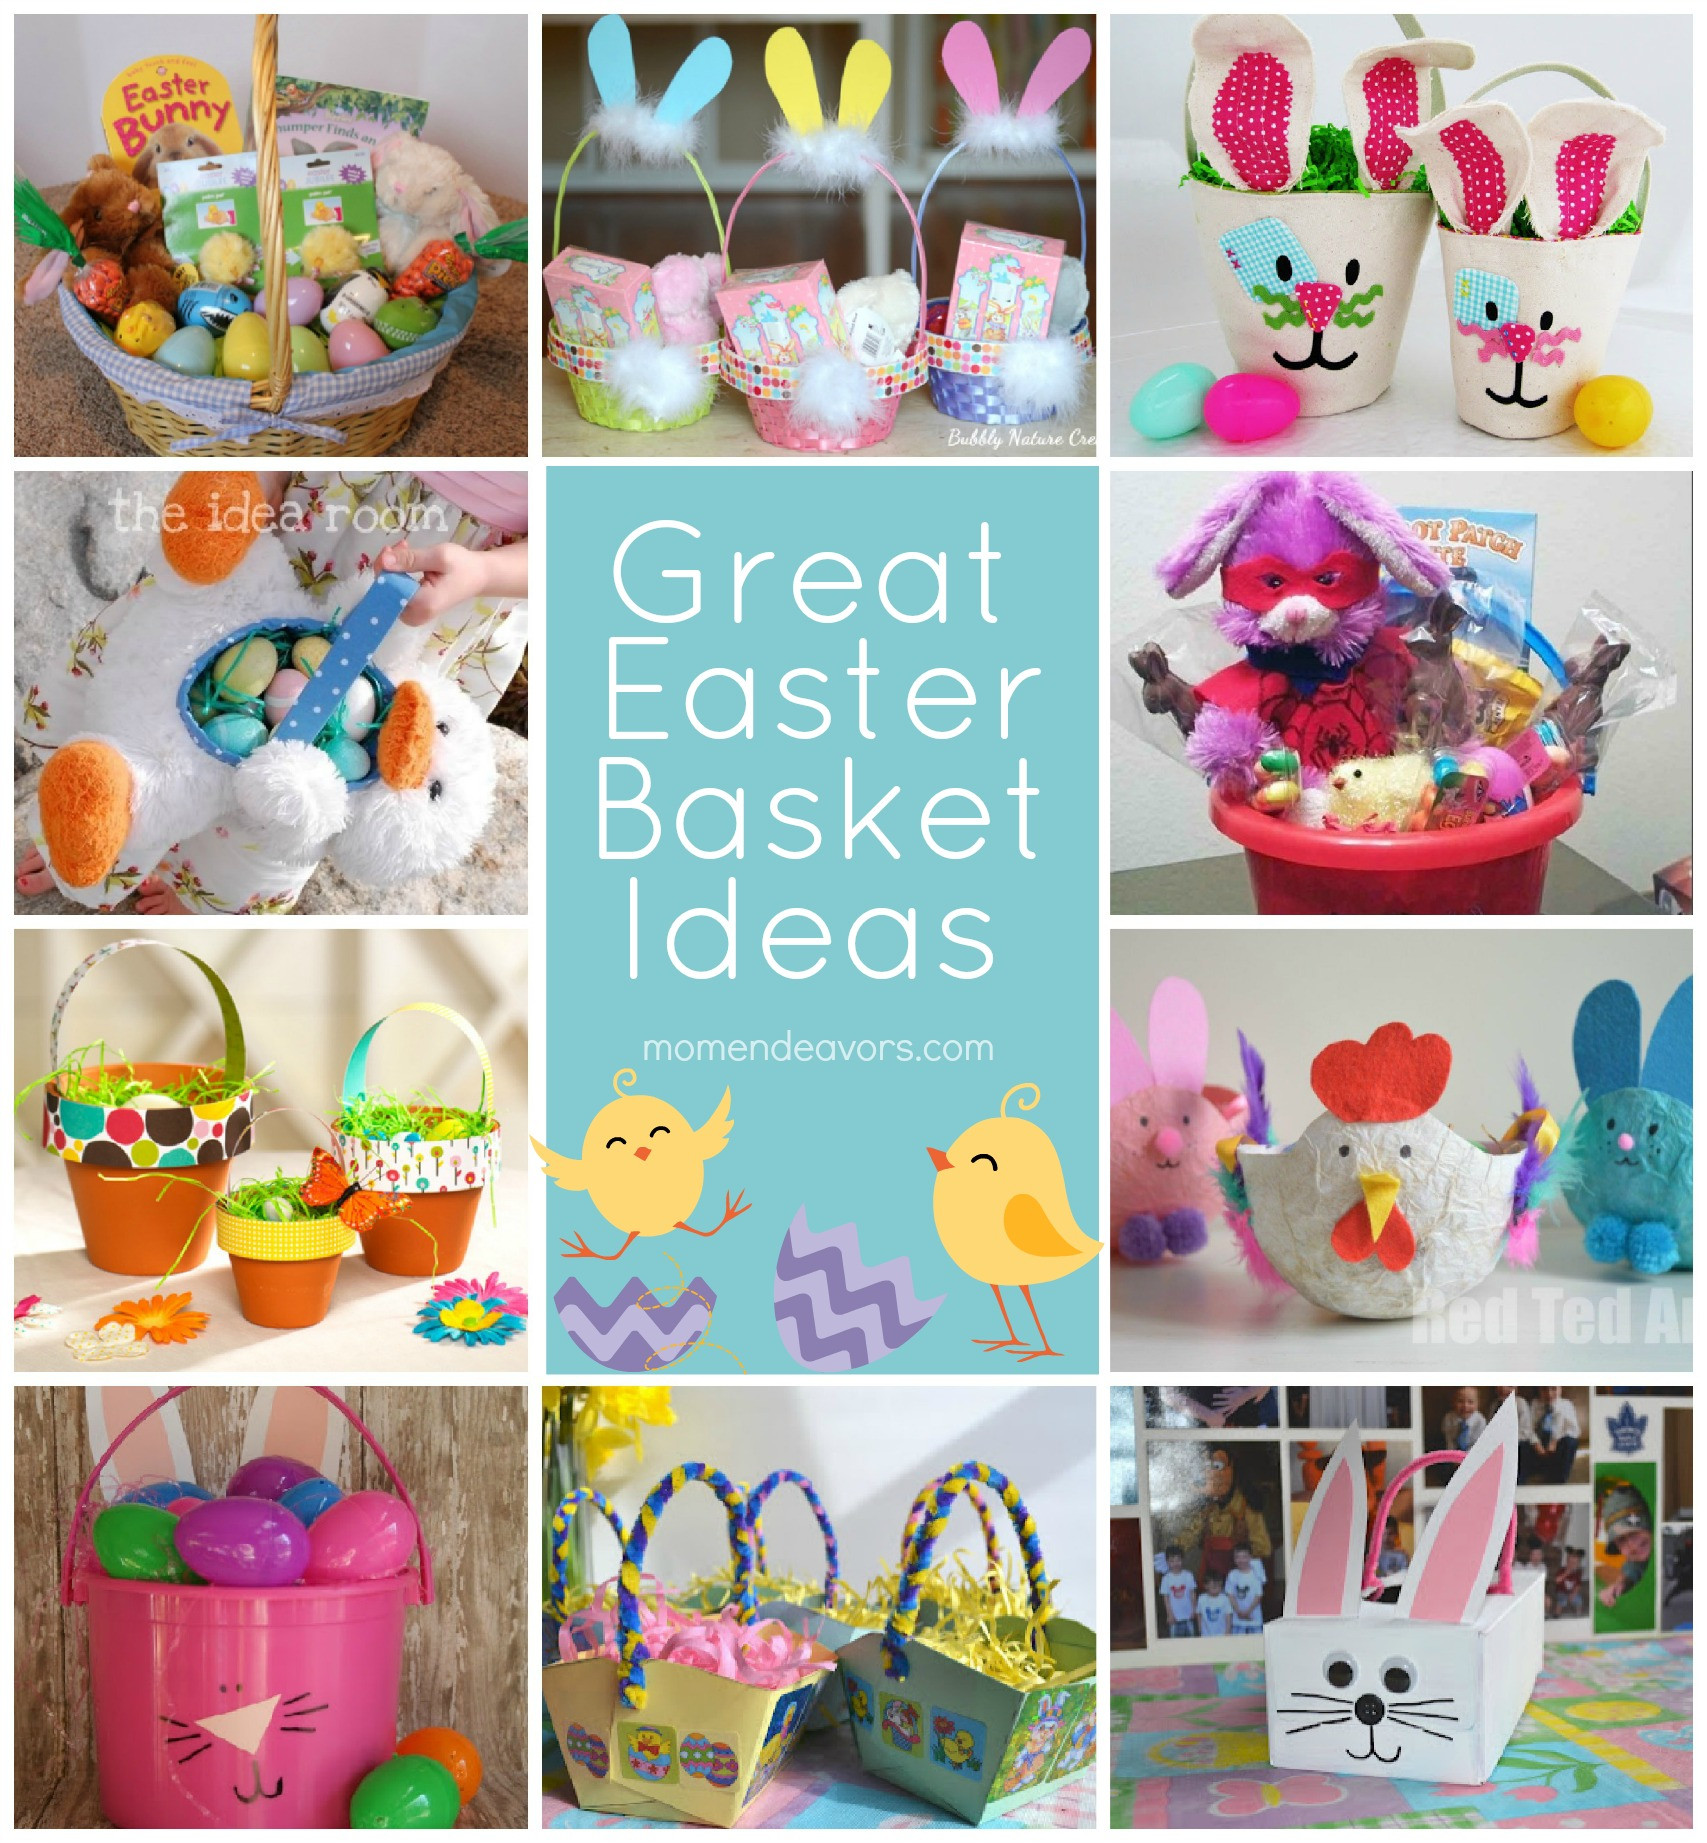 DIY Easter Basket Ideas For Toddlers
 Great Easter Basket Ideas